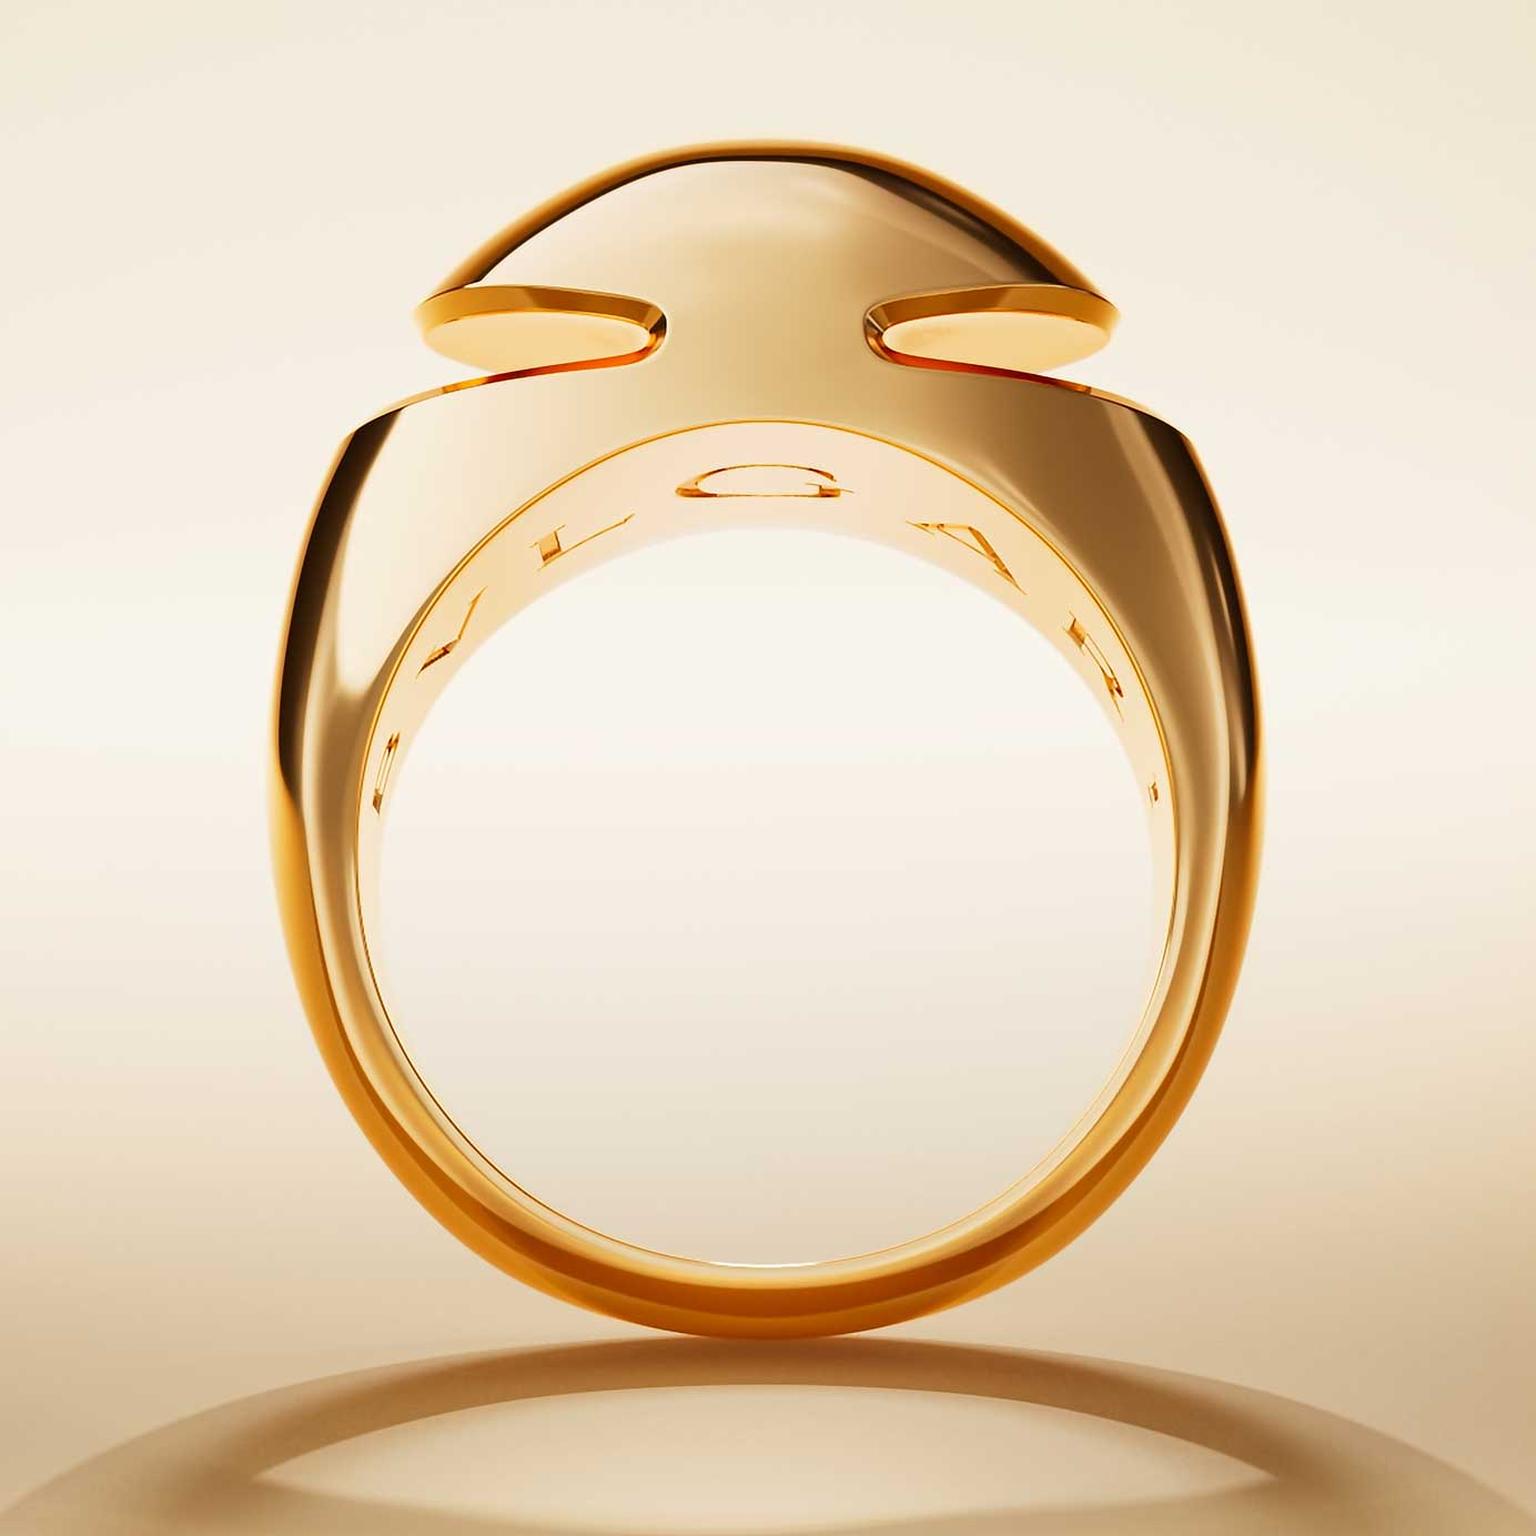 Bulgari Cabochon gold ring silhouette